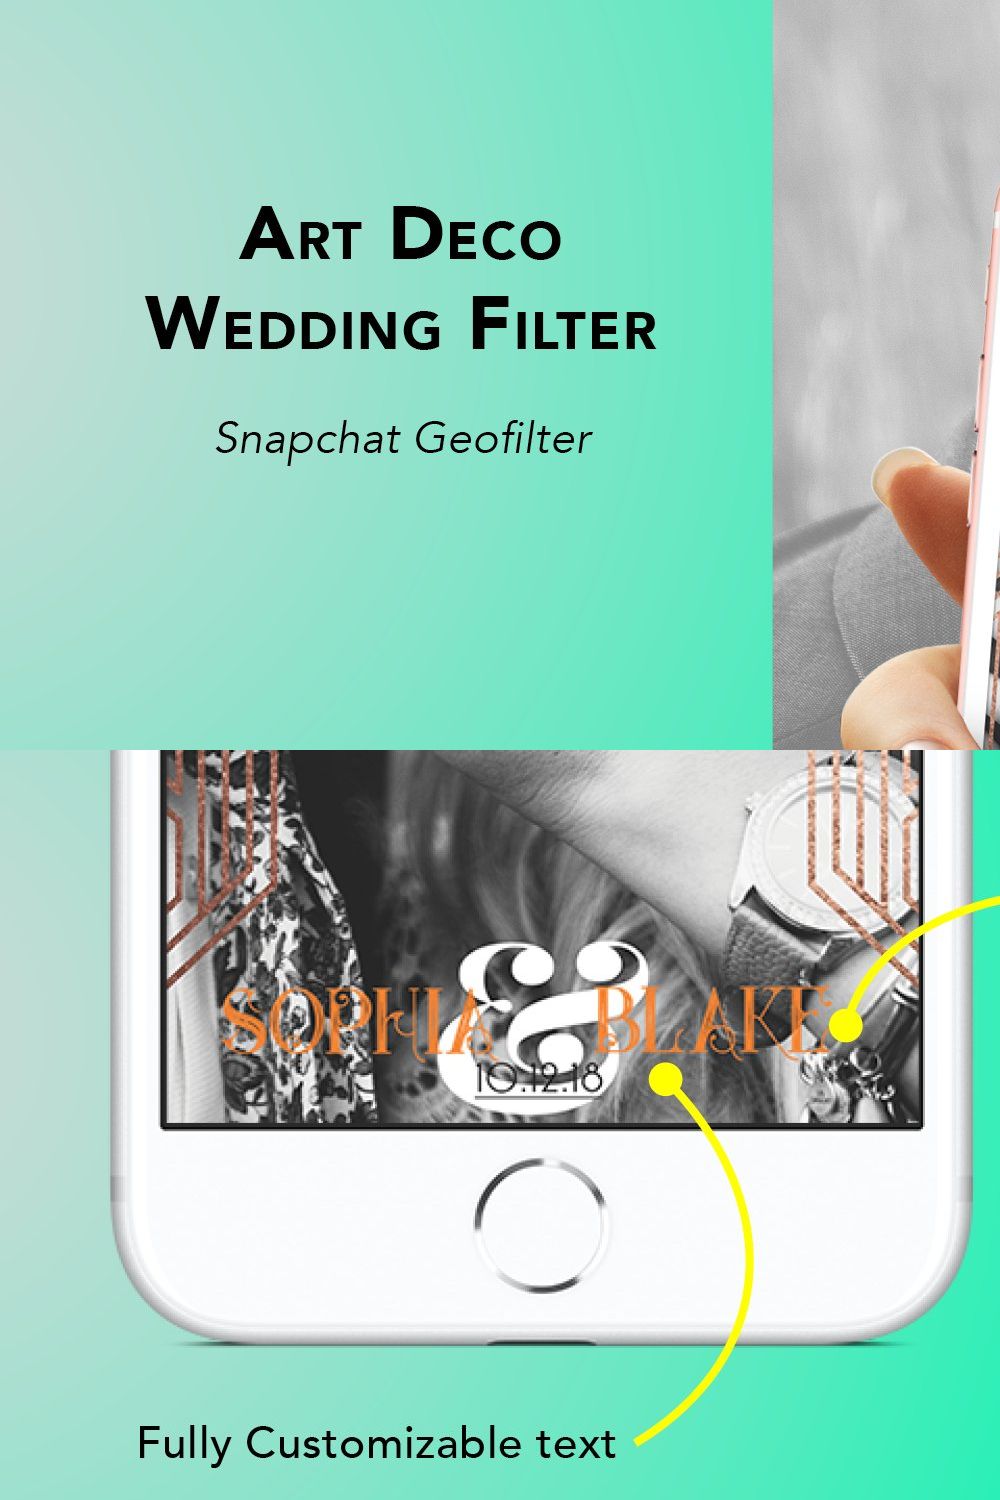 Art Deco Wedding Geofilter pinterest preview image.